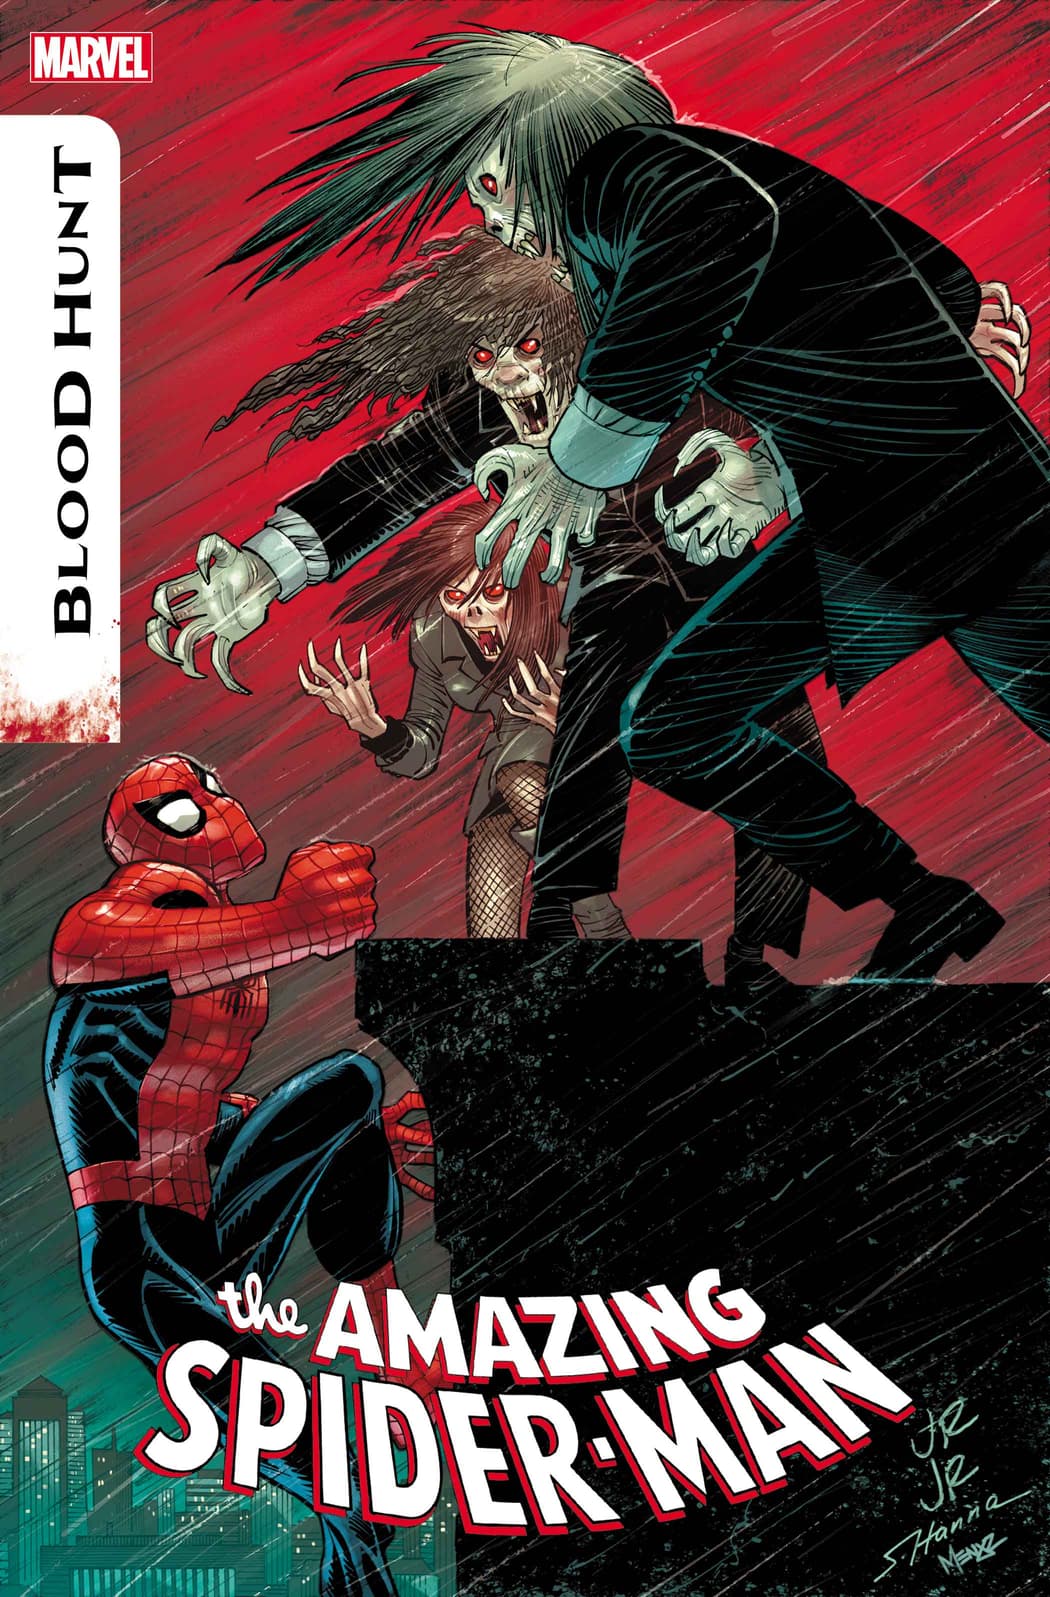 AMAZING SPIDER-MAN #49 cover by John Romita Jr.